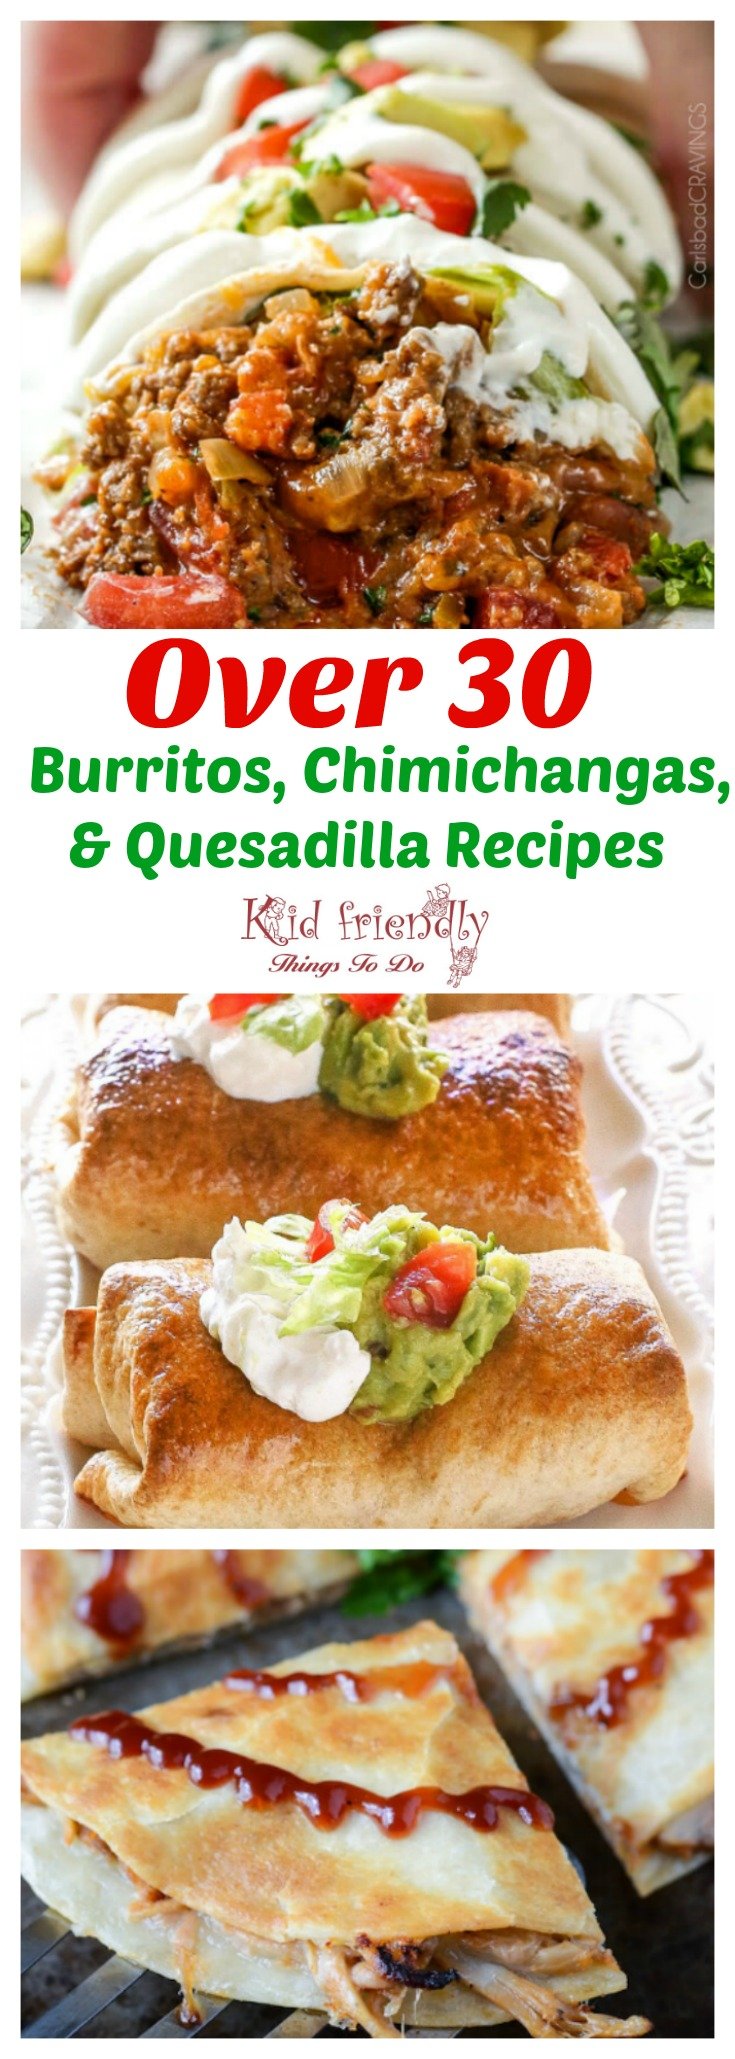 Over 30 Burrito, Chimichanga, and Quesadilla Mexican Recipes width=